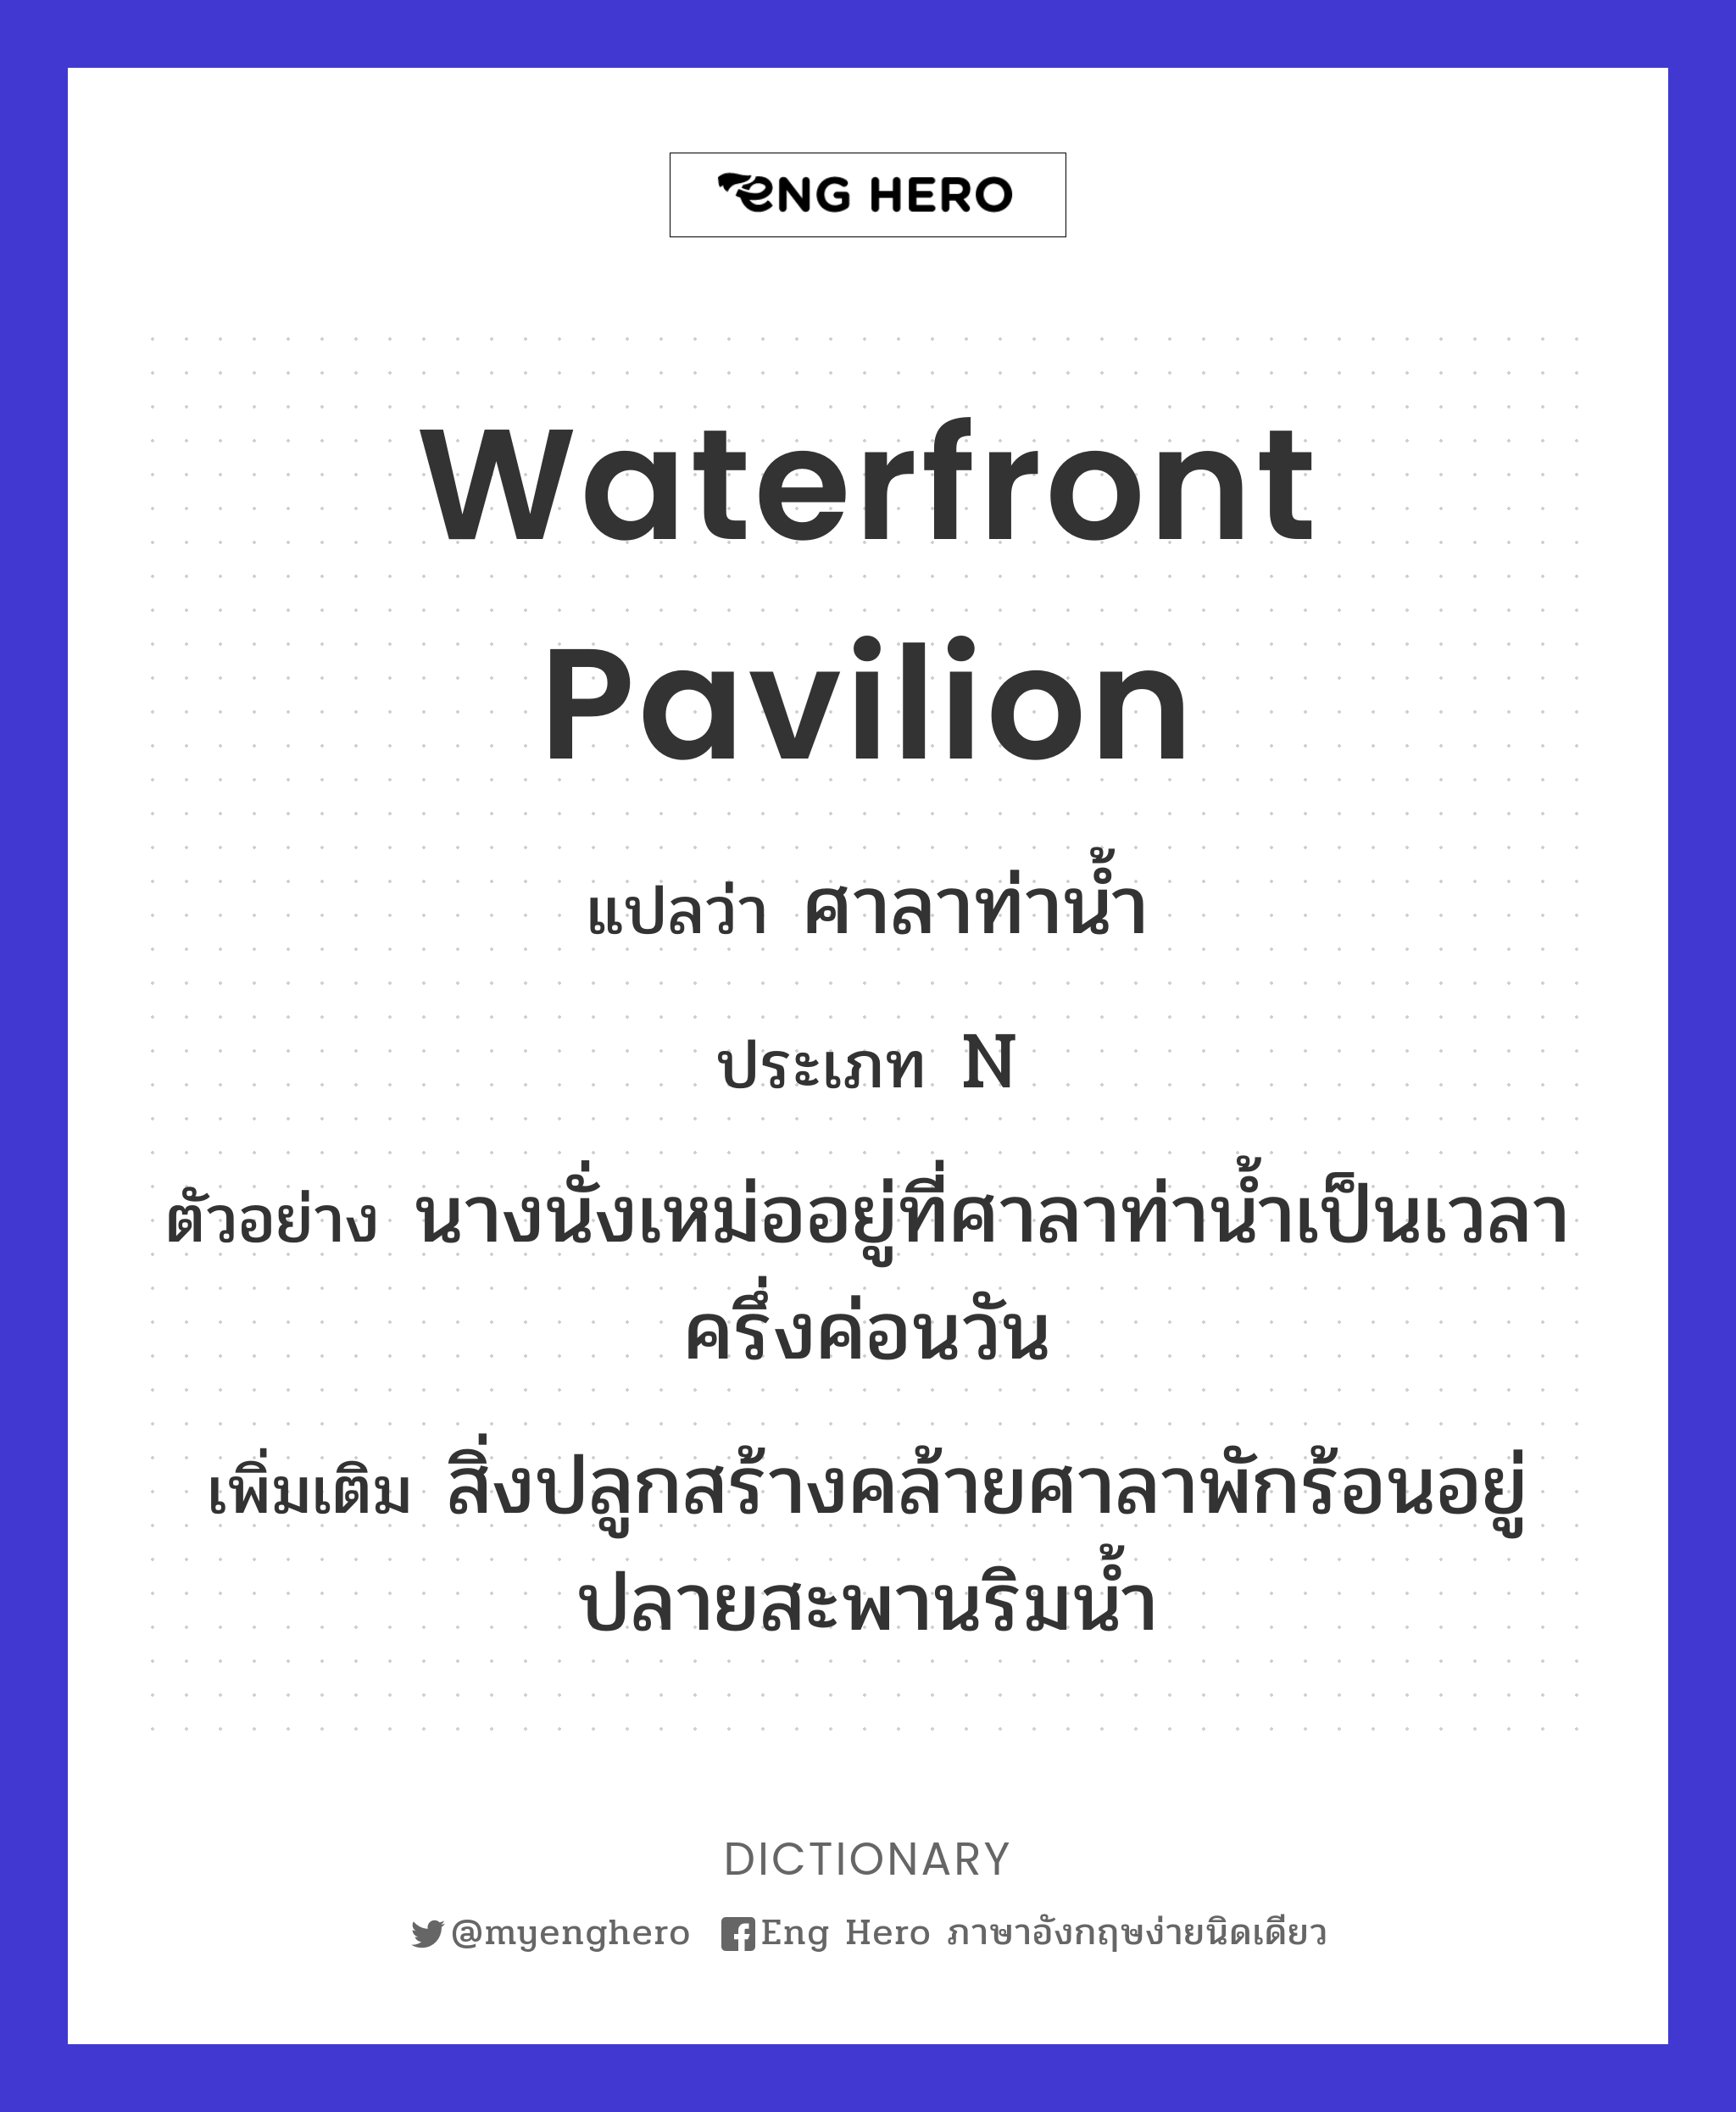 waterfront pavilion